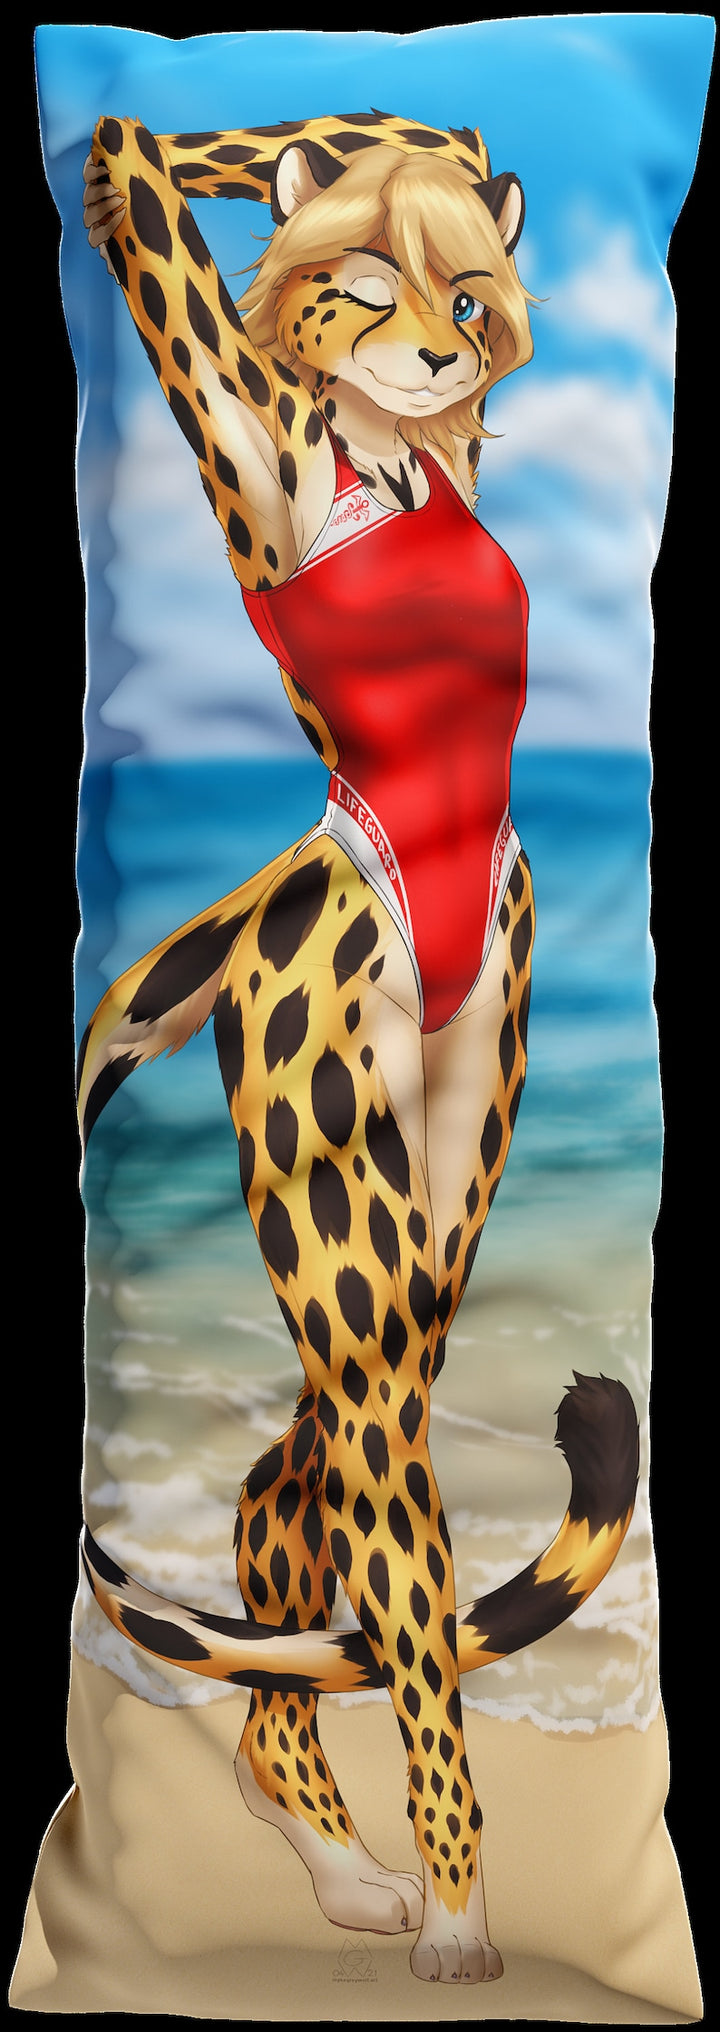 Daki Apricot - Art by MykeGreywolf - the lifeguard cheetah girl Dakimakura Furry Body Pillow Cover